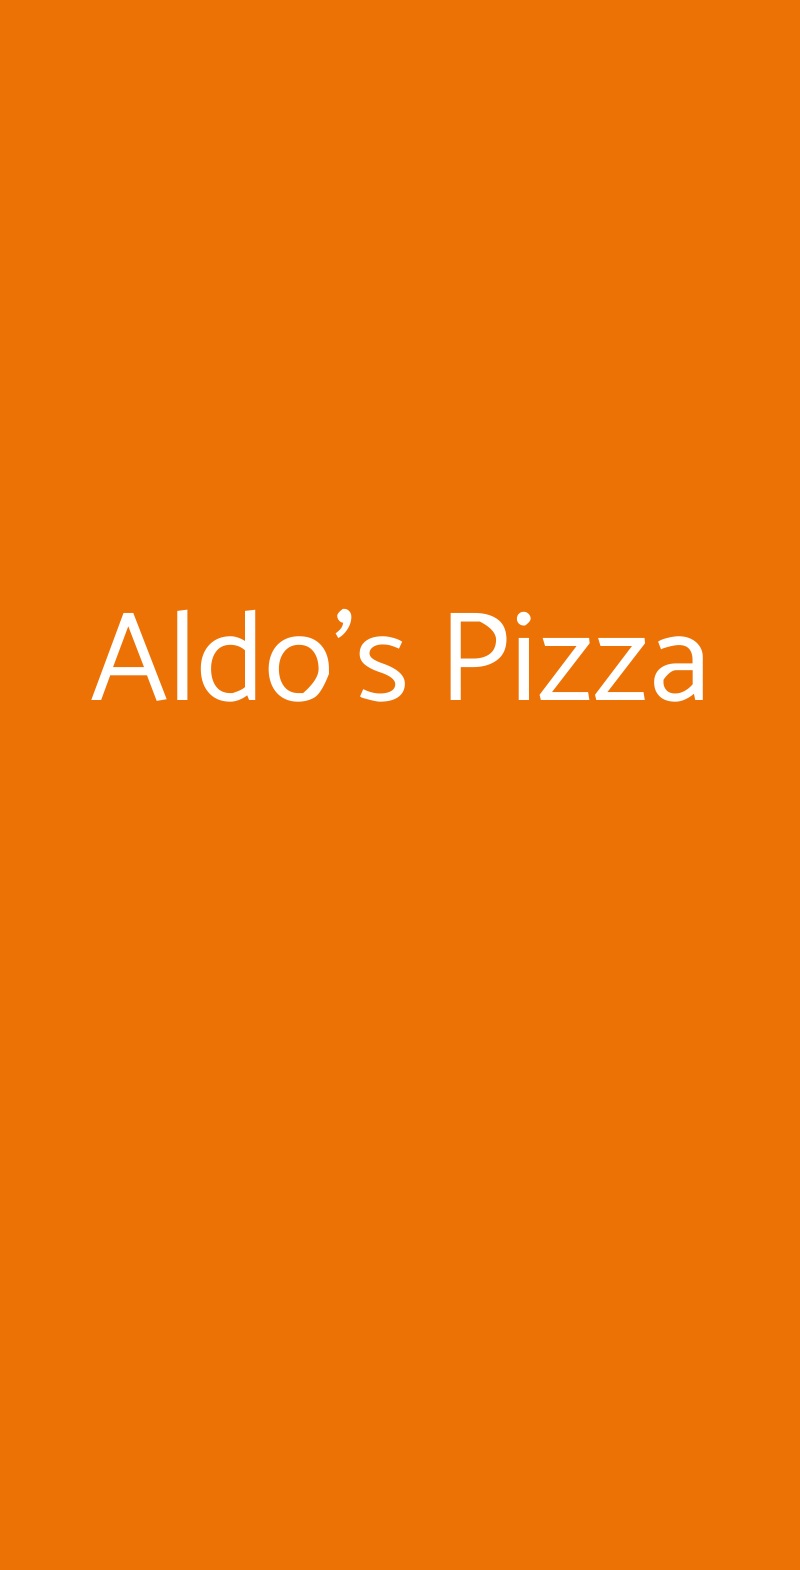 Aldo's Pizza Verona menù 1 pagina